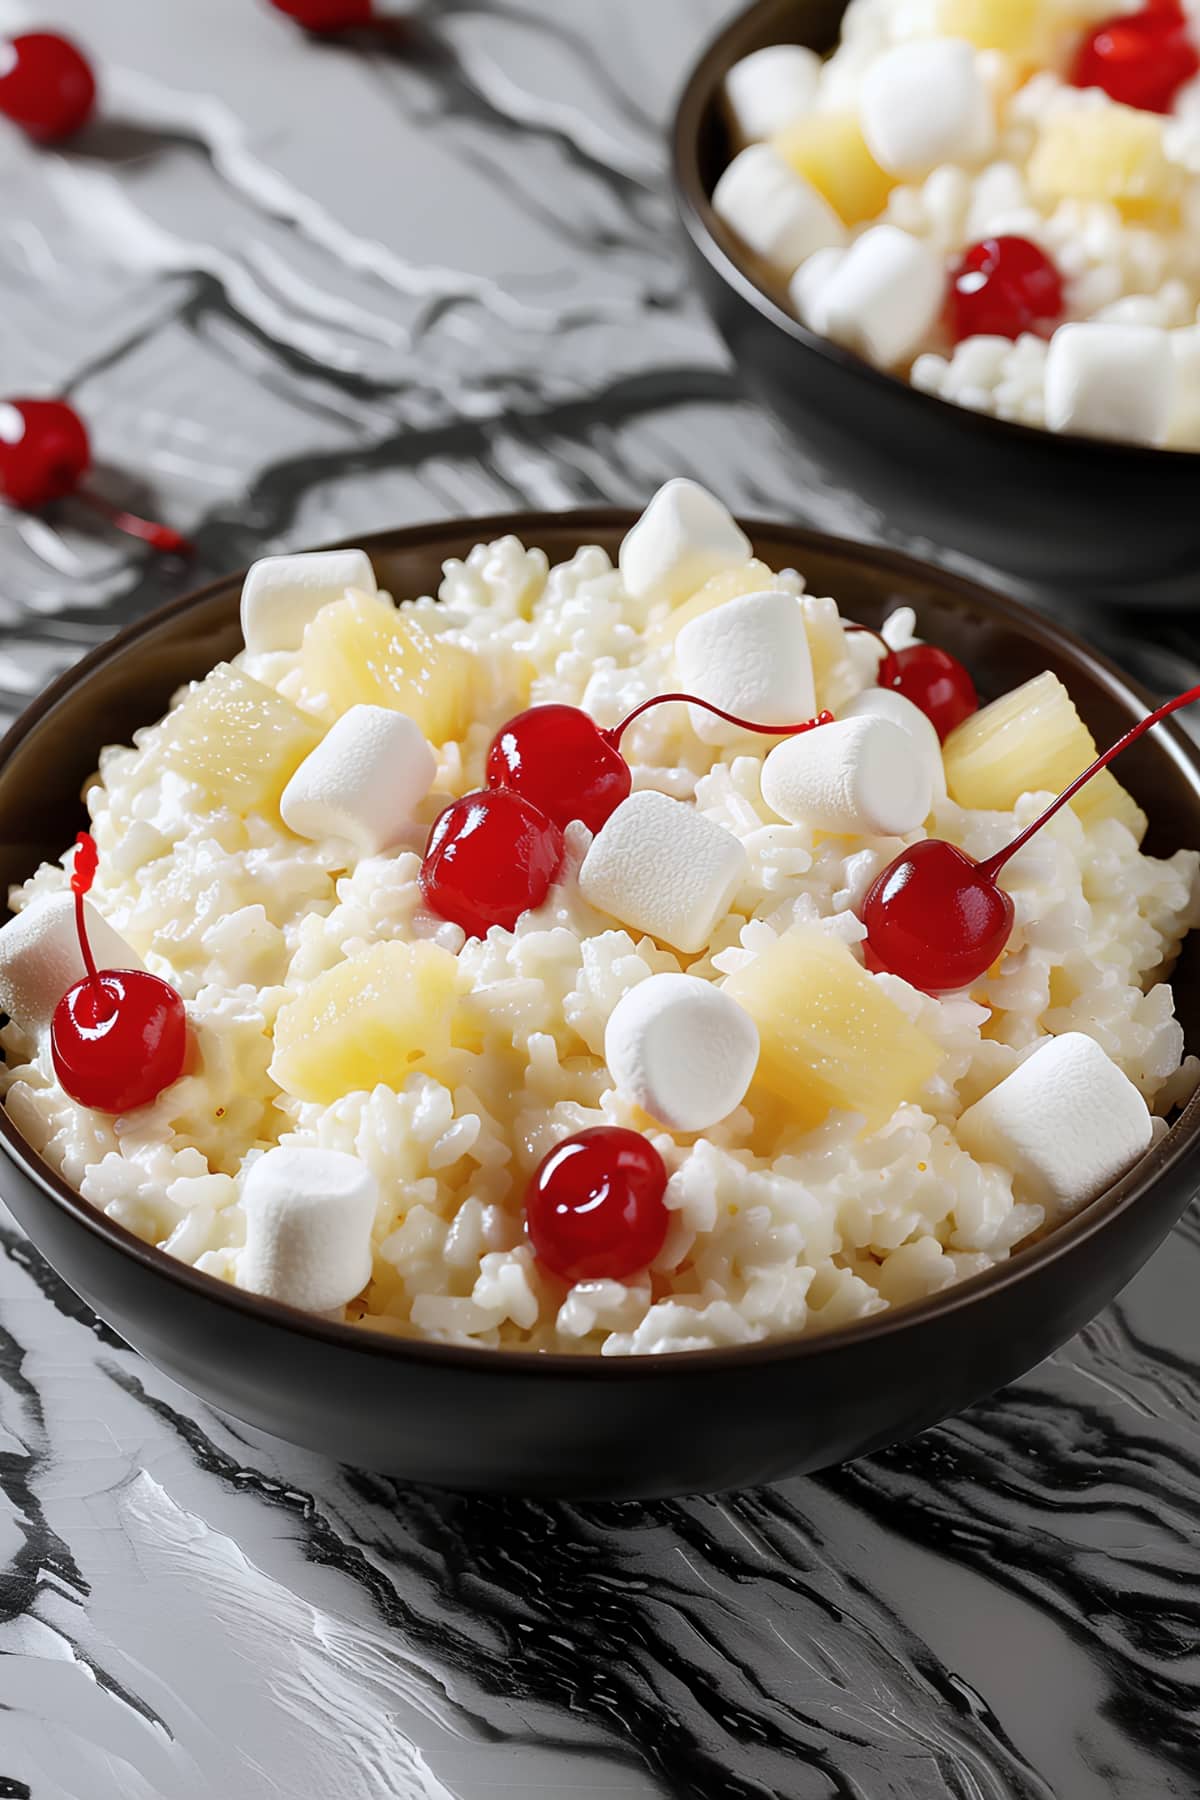 Homemade glorified rice topped with pineapple bits, maraschino cherries and marshmallows